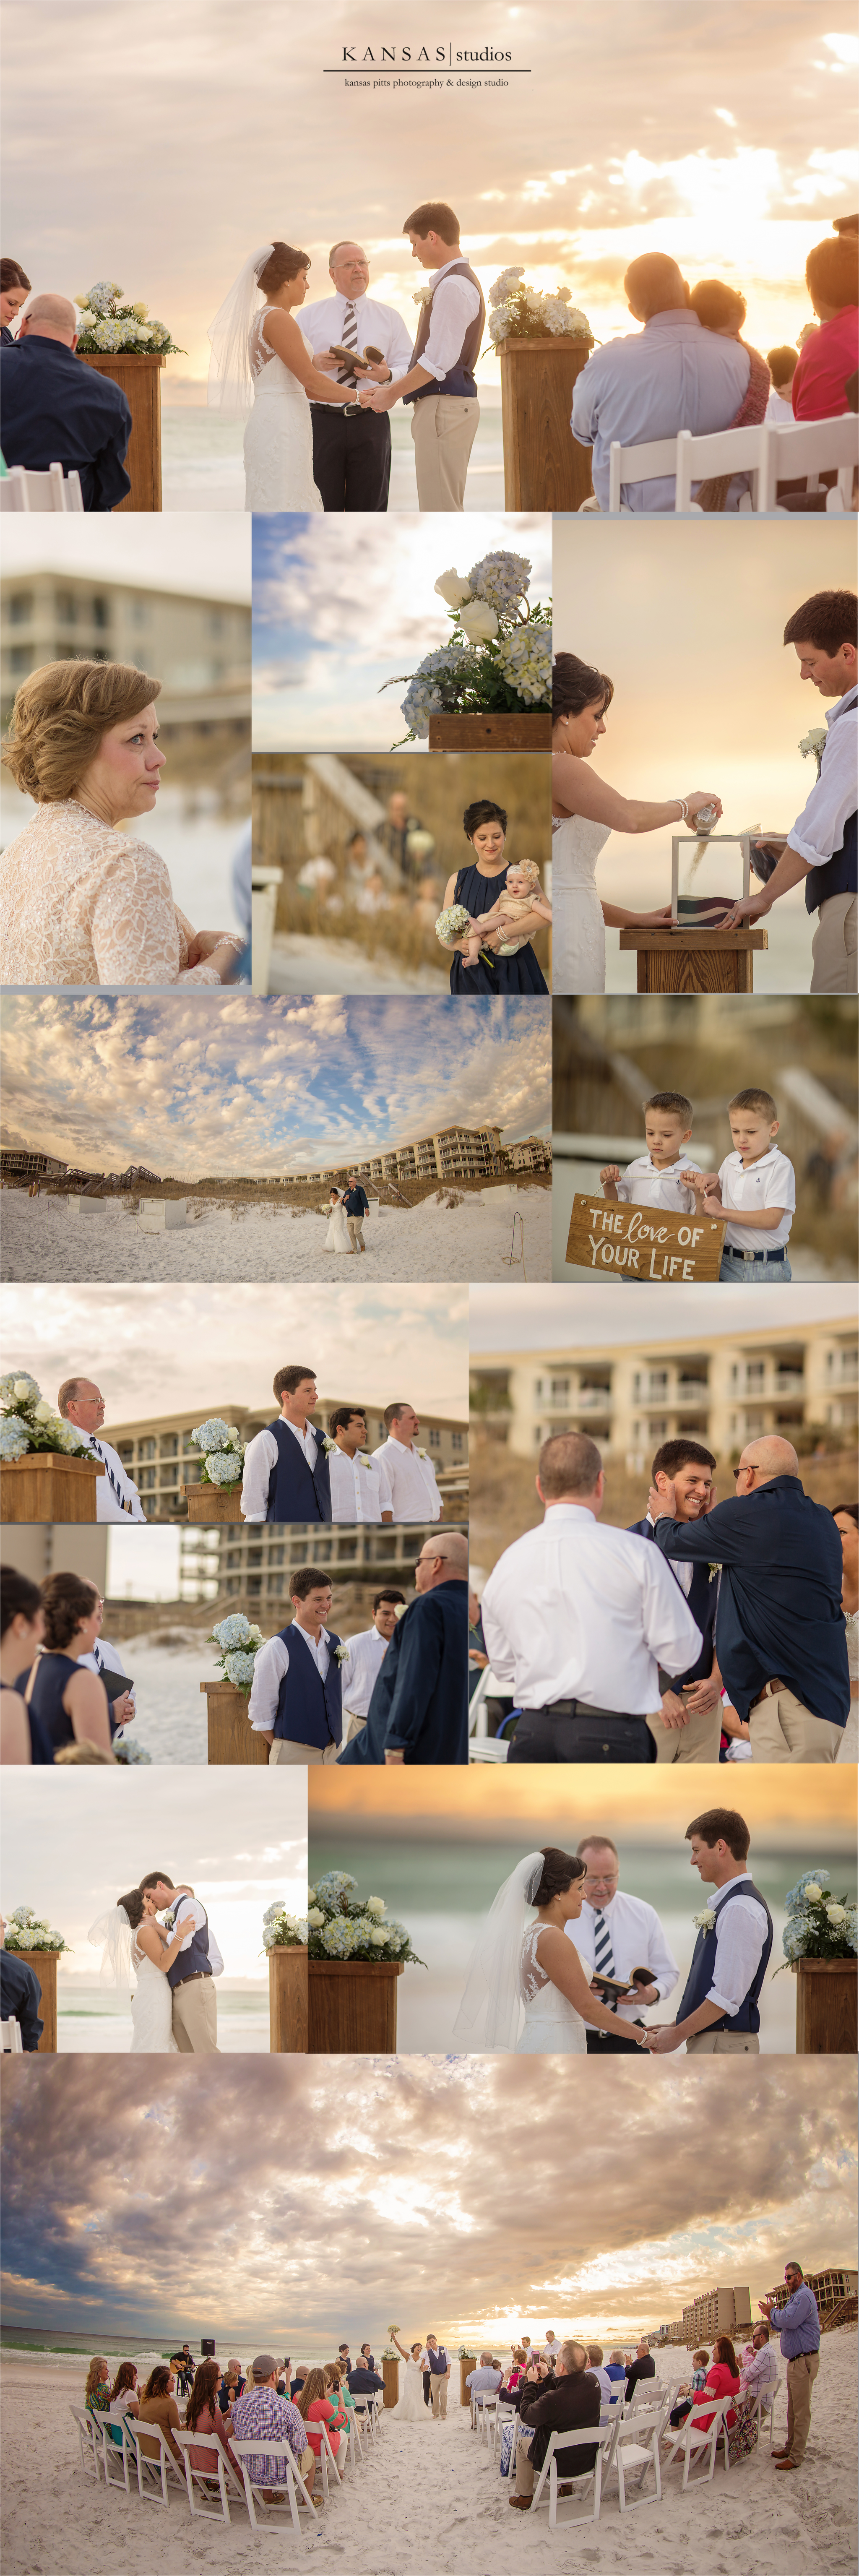 SAndestin Beach Wedding Photographer 